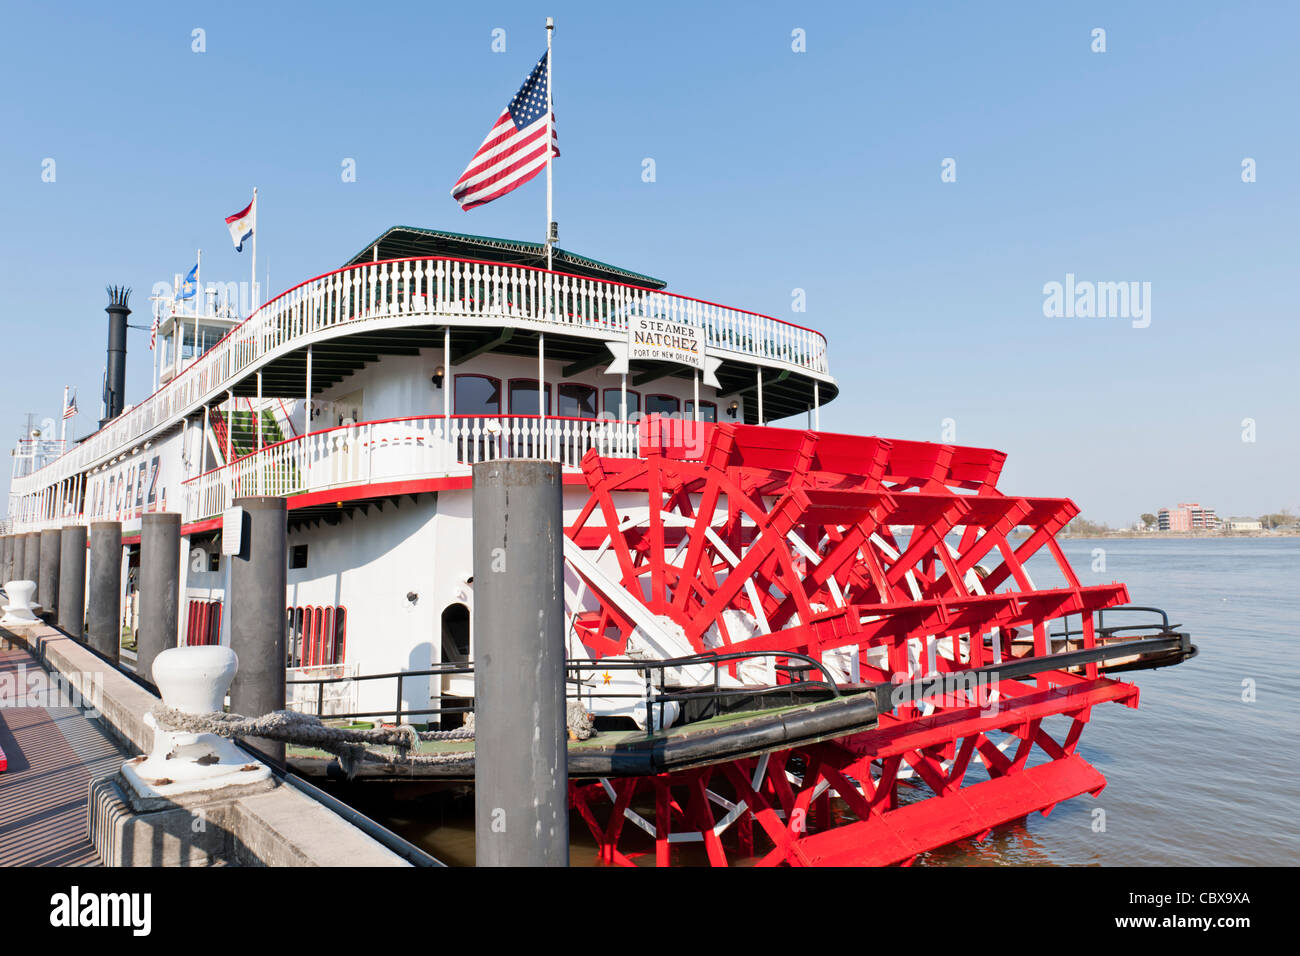 Natchez IX Steamboat cruise, New Orleans Stock Photo